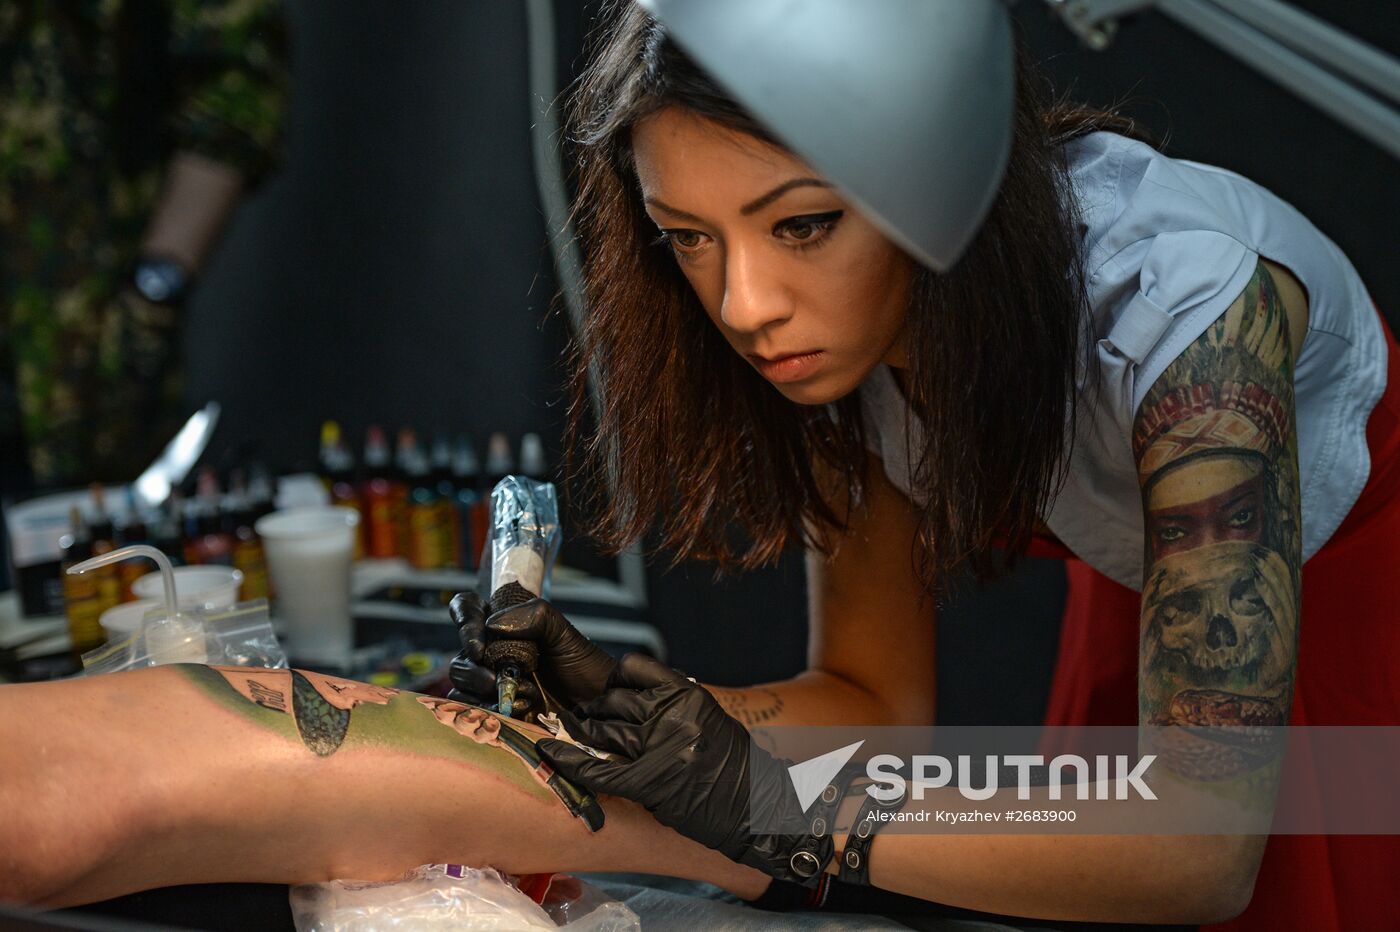 Tattoo festival in Novosibirsk